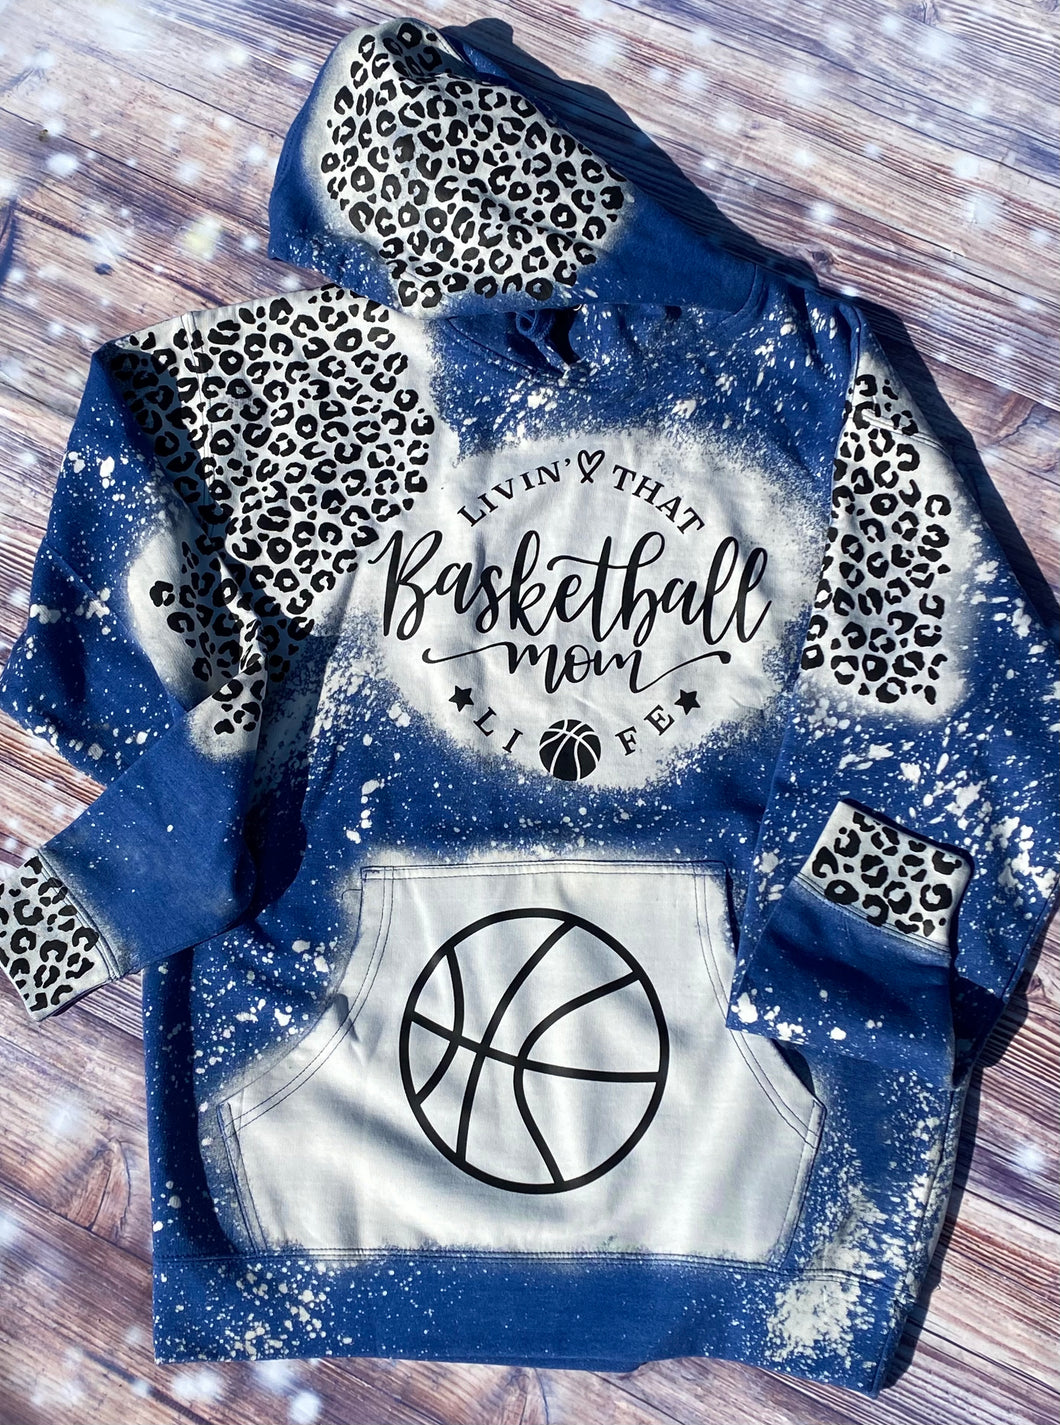 Livin’ That Basketball Mom Life Blue Bleached Leopard Hoodie - Mavictoria Designs Hot Press Express